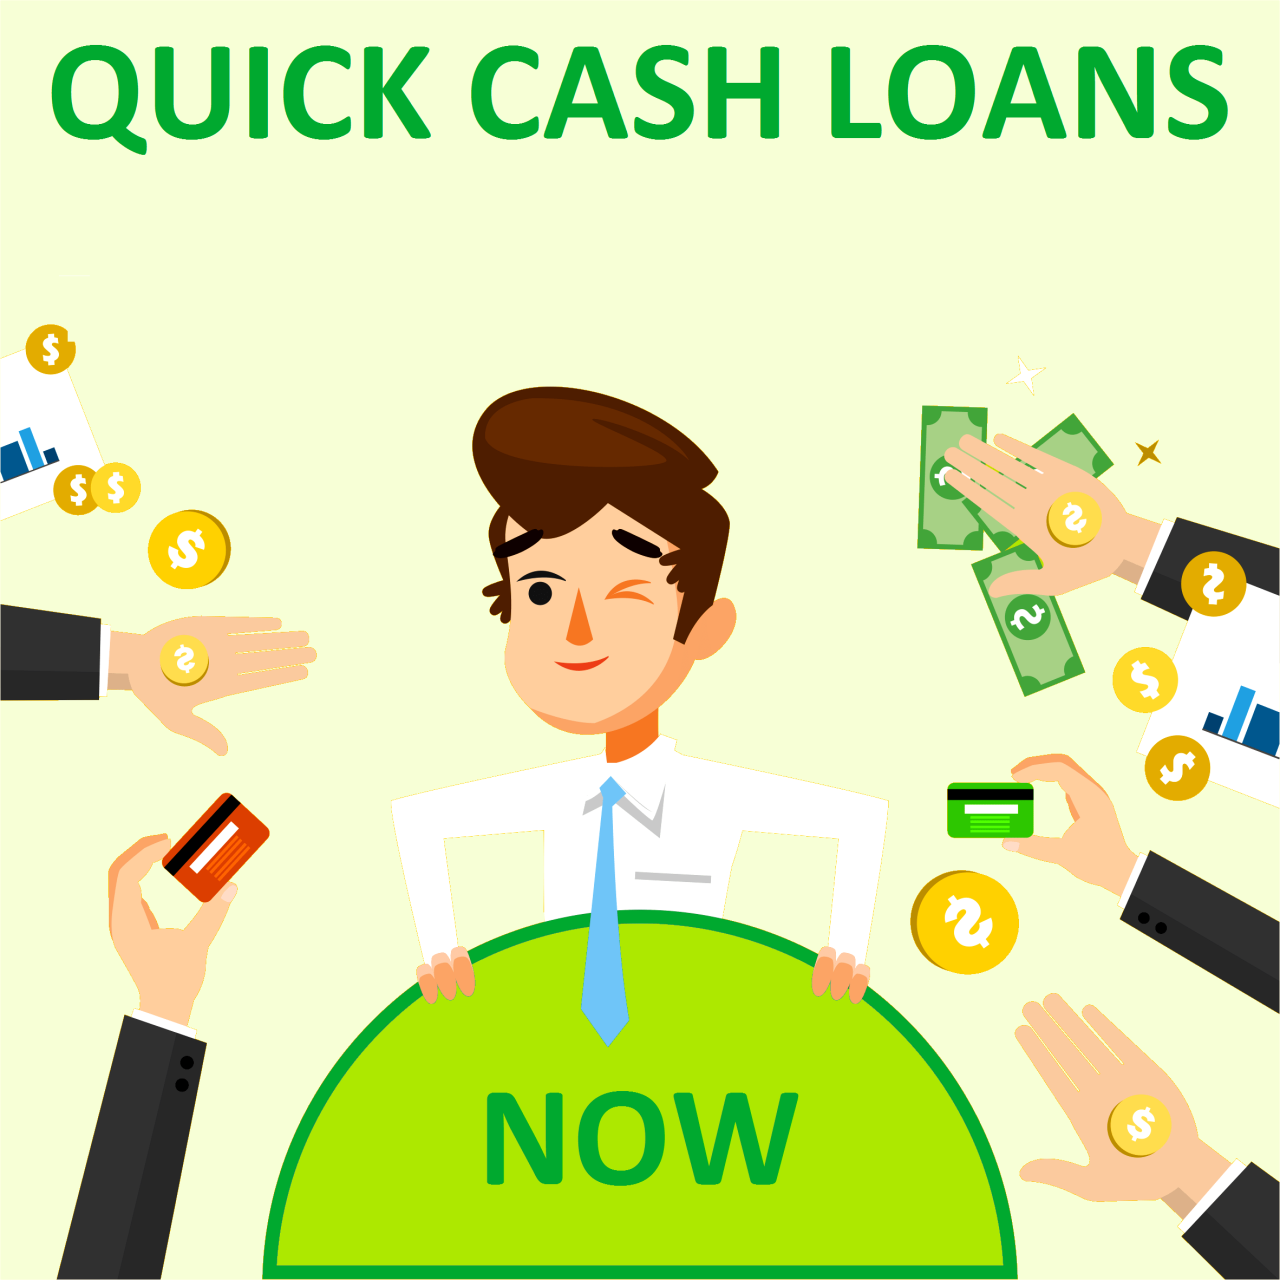 Quick Cash Loans Now Loan Away